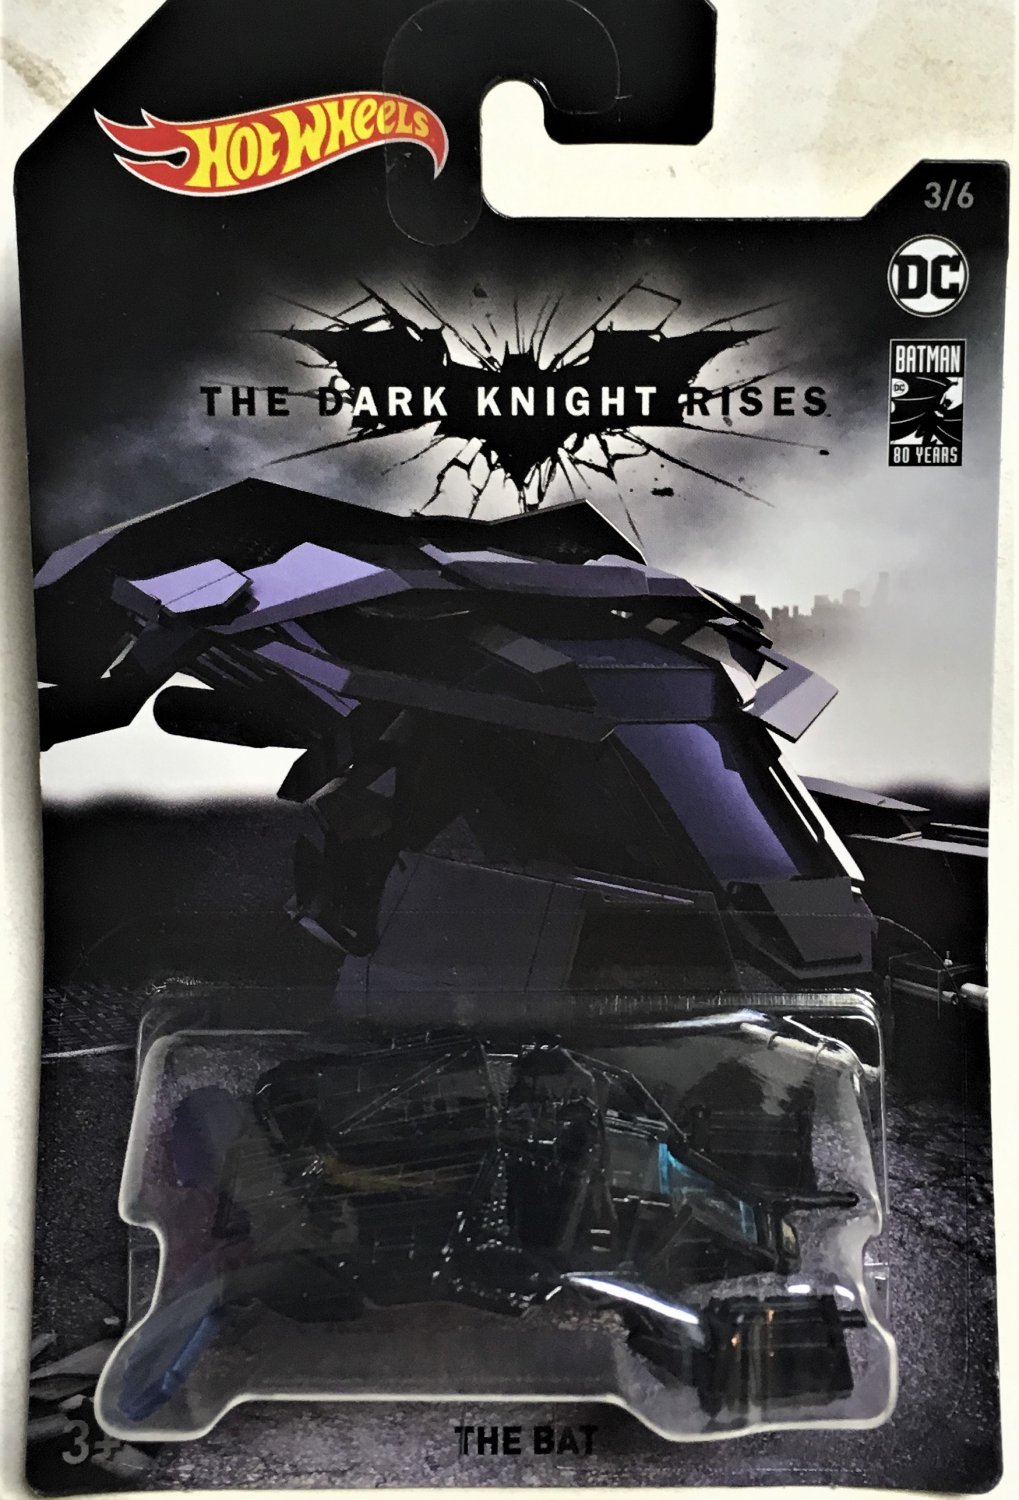 The Bat #3 Of Series Details about  / 2019-Hot Wheels Batman The Dark Knight Rises